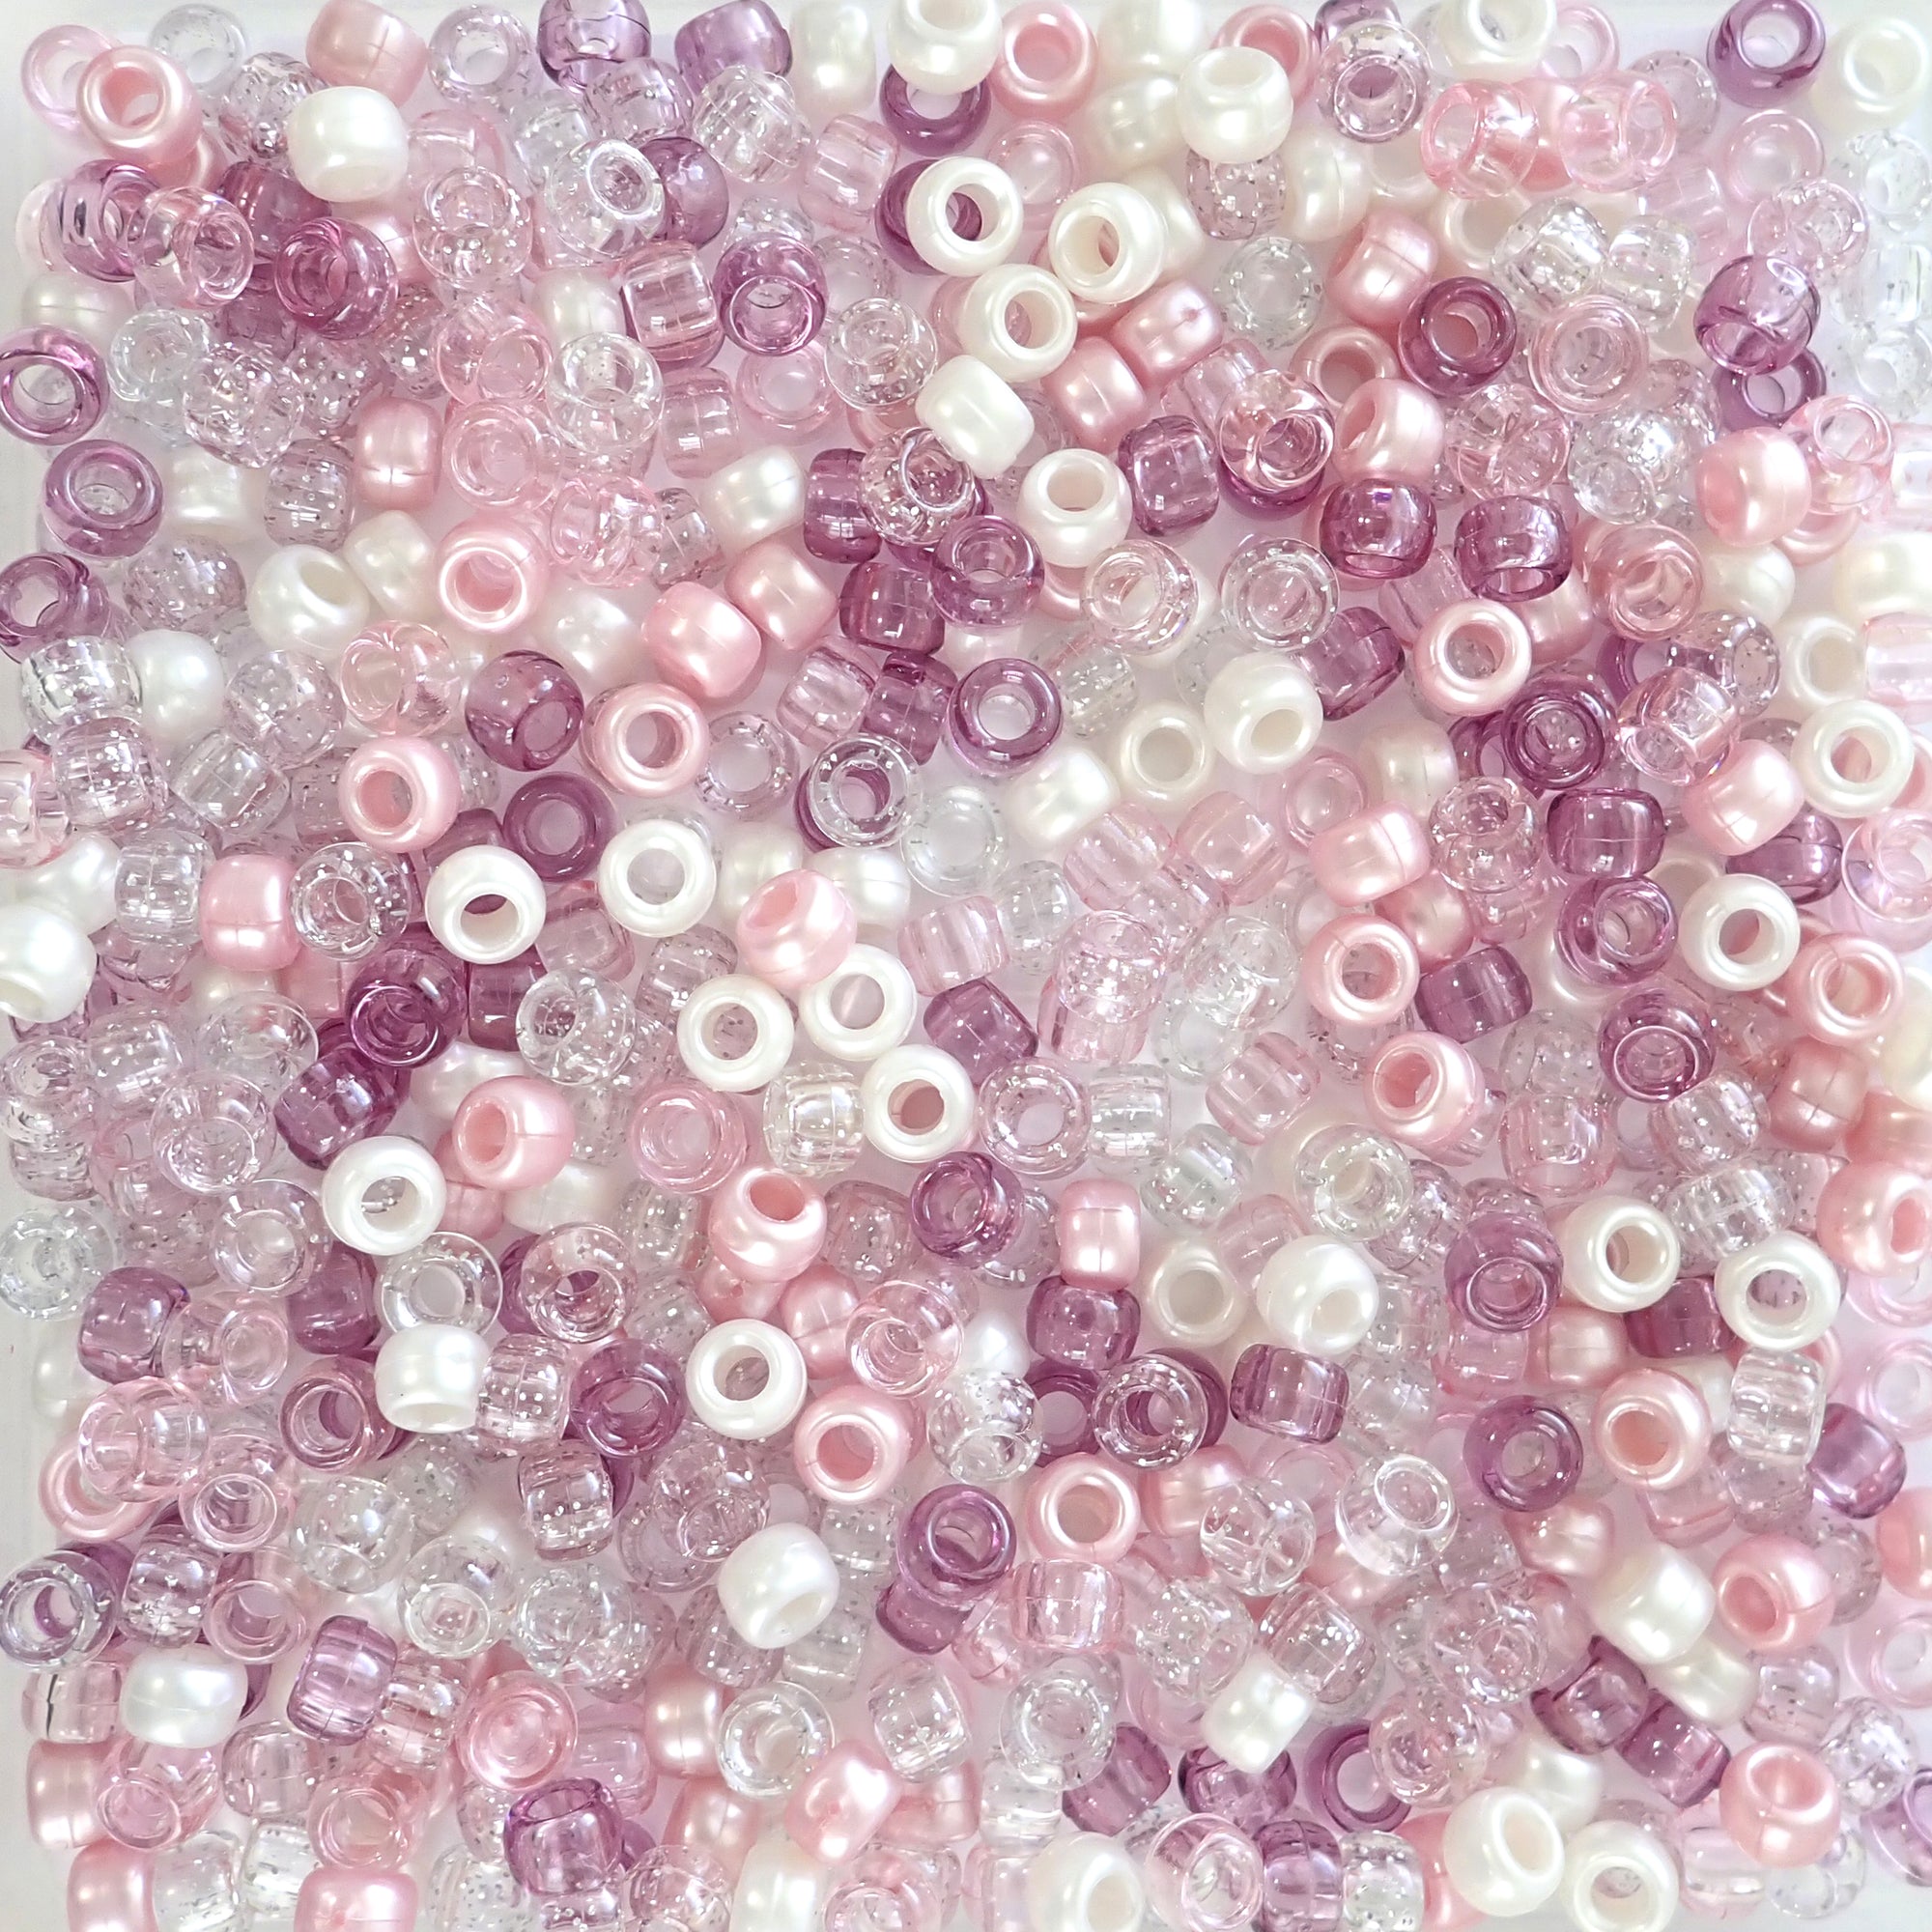 Pink Ice Mix Plastic Pony Beads. Size 6 x 9 mm. Craft Beads.